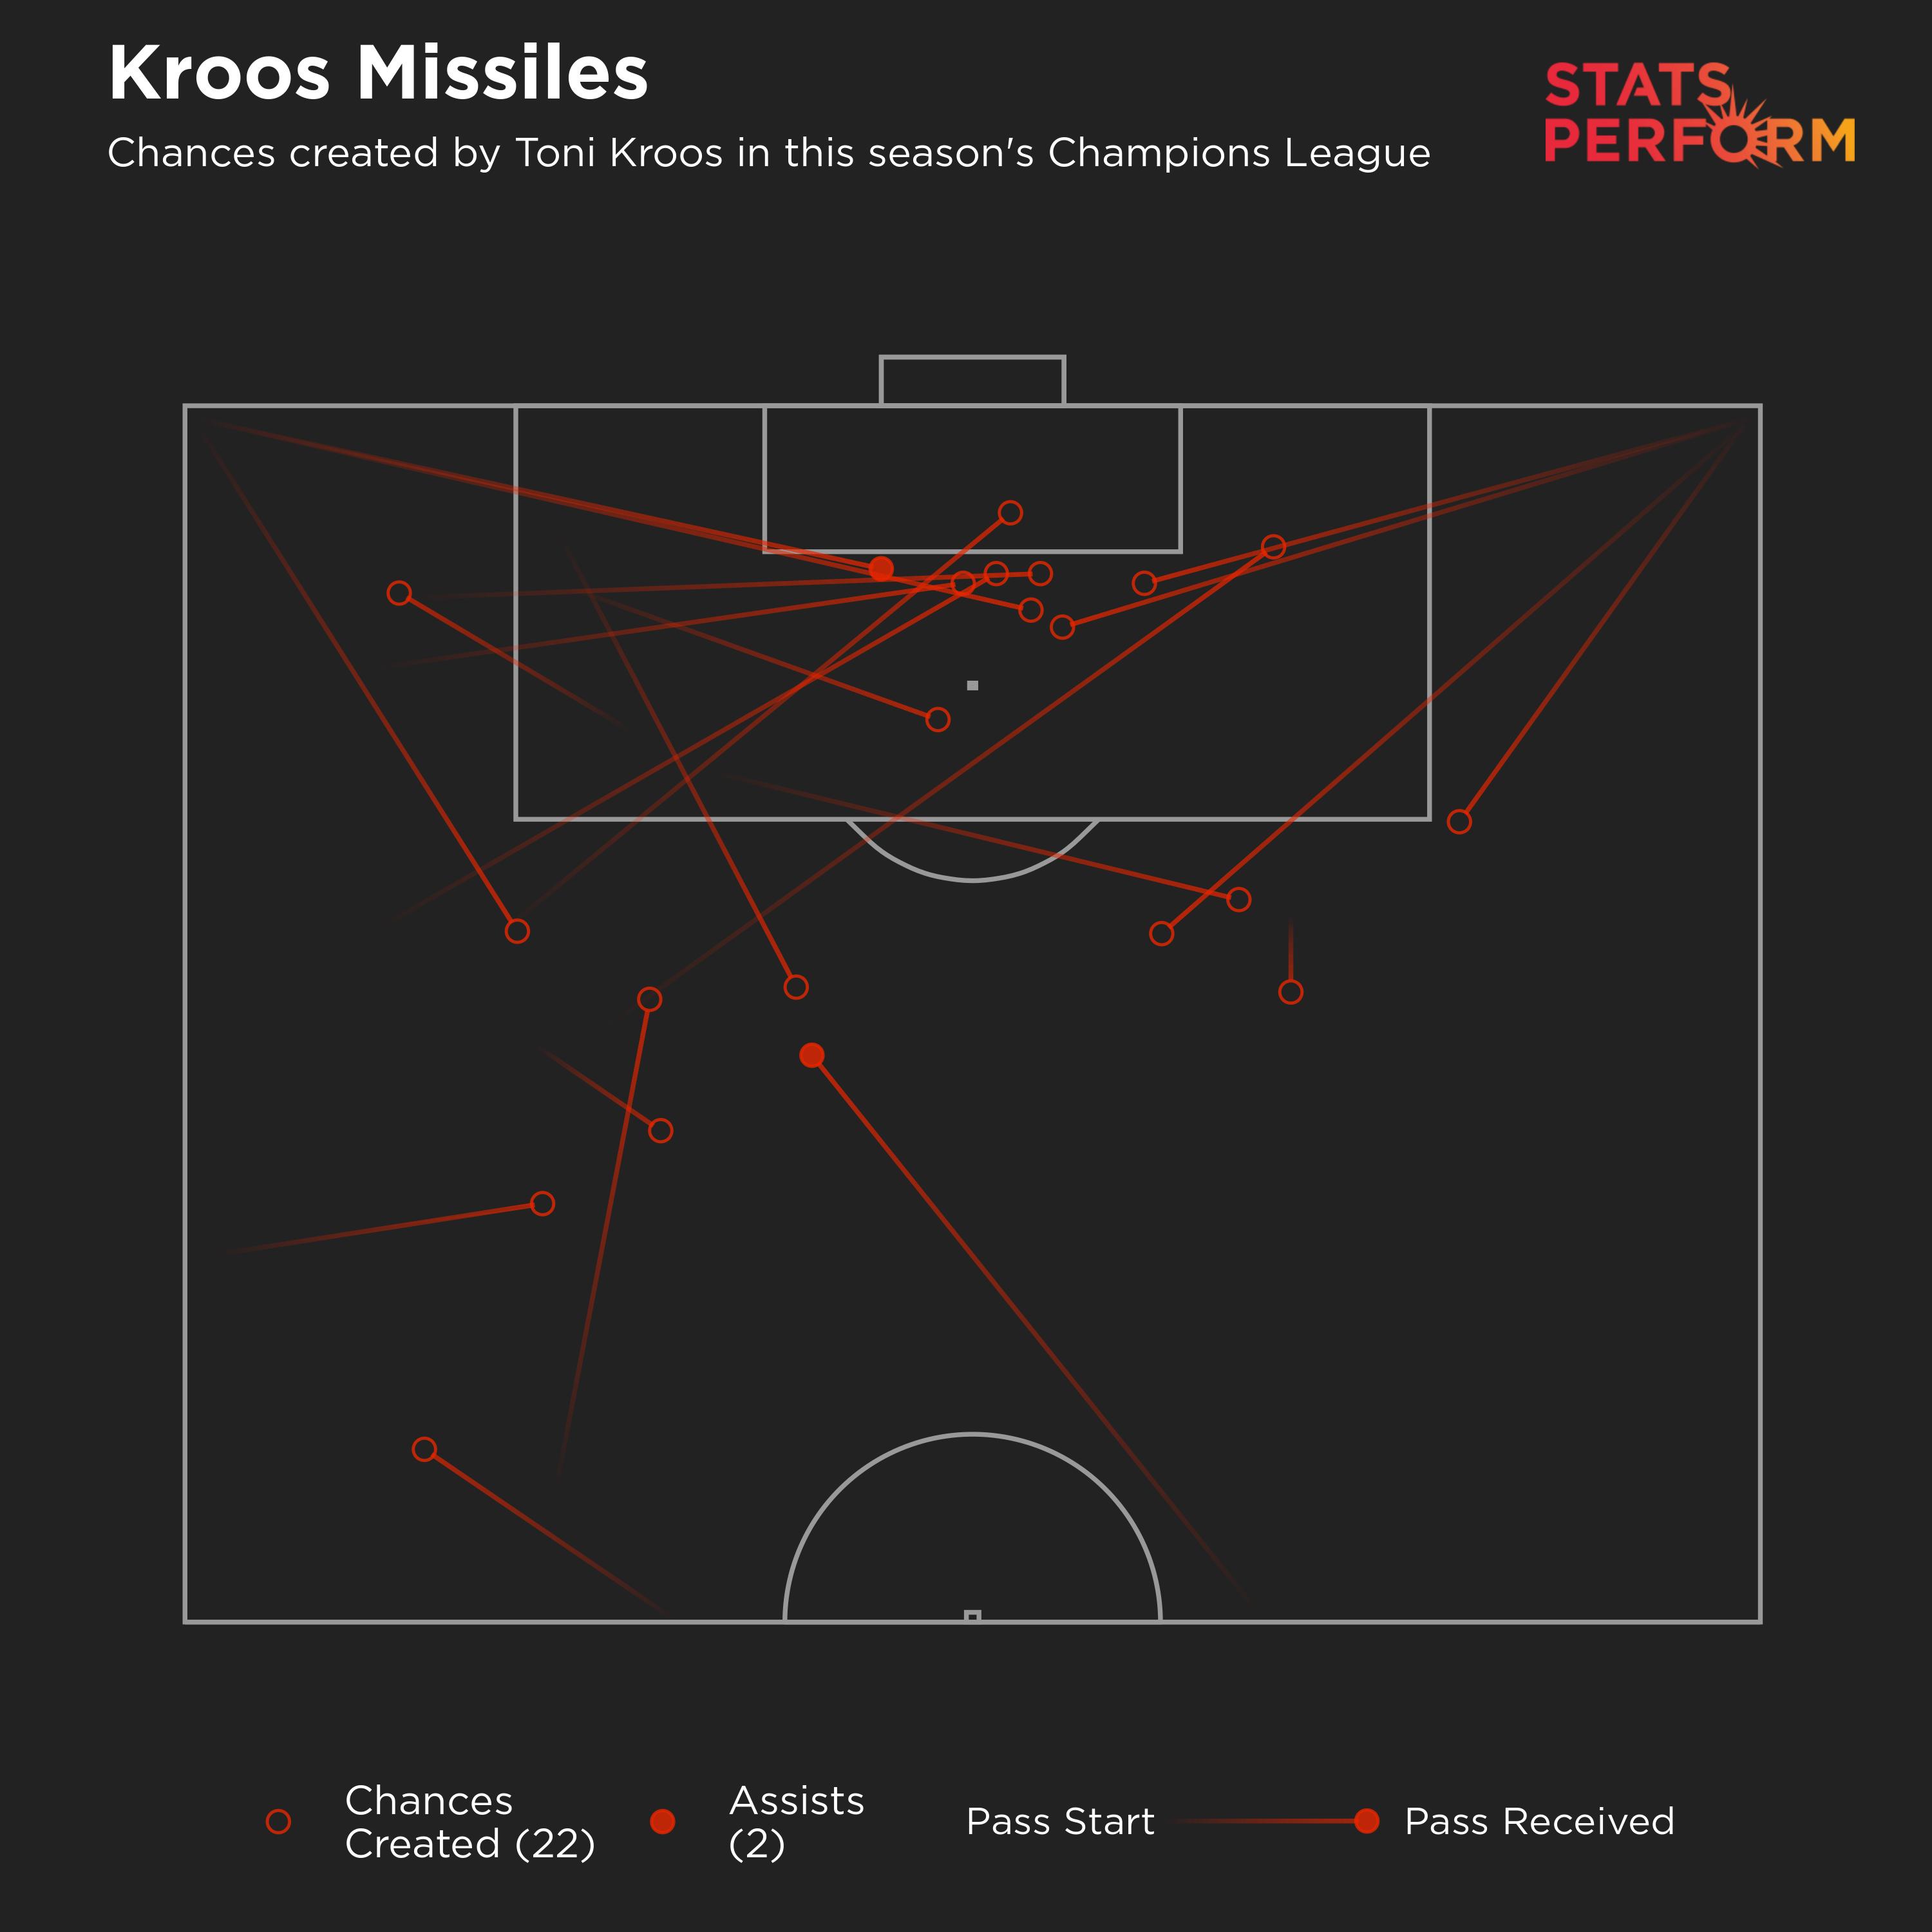 Toni Kroos chances created